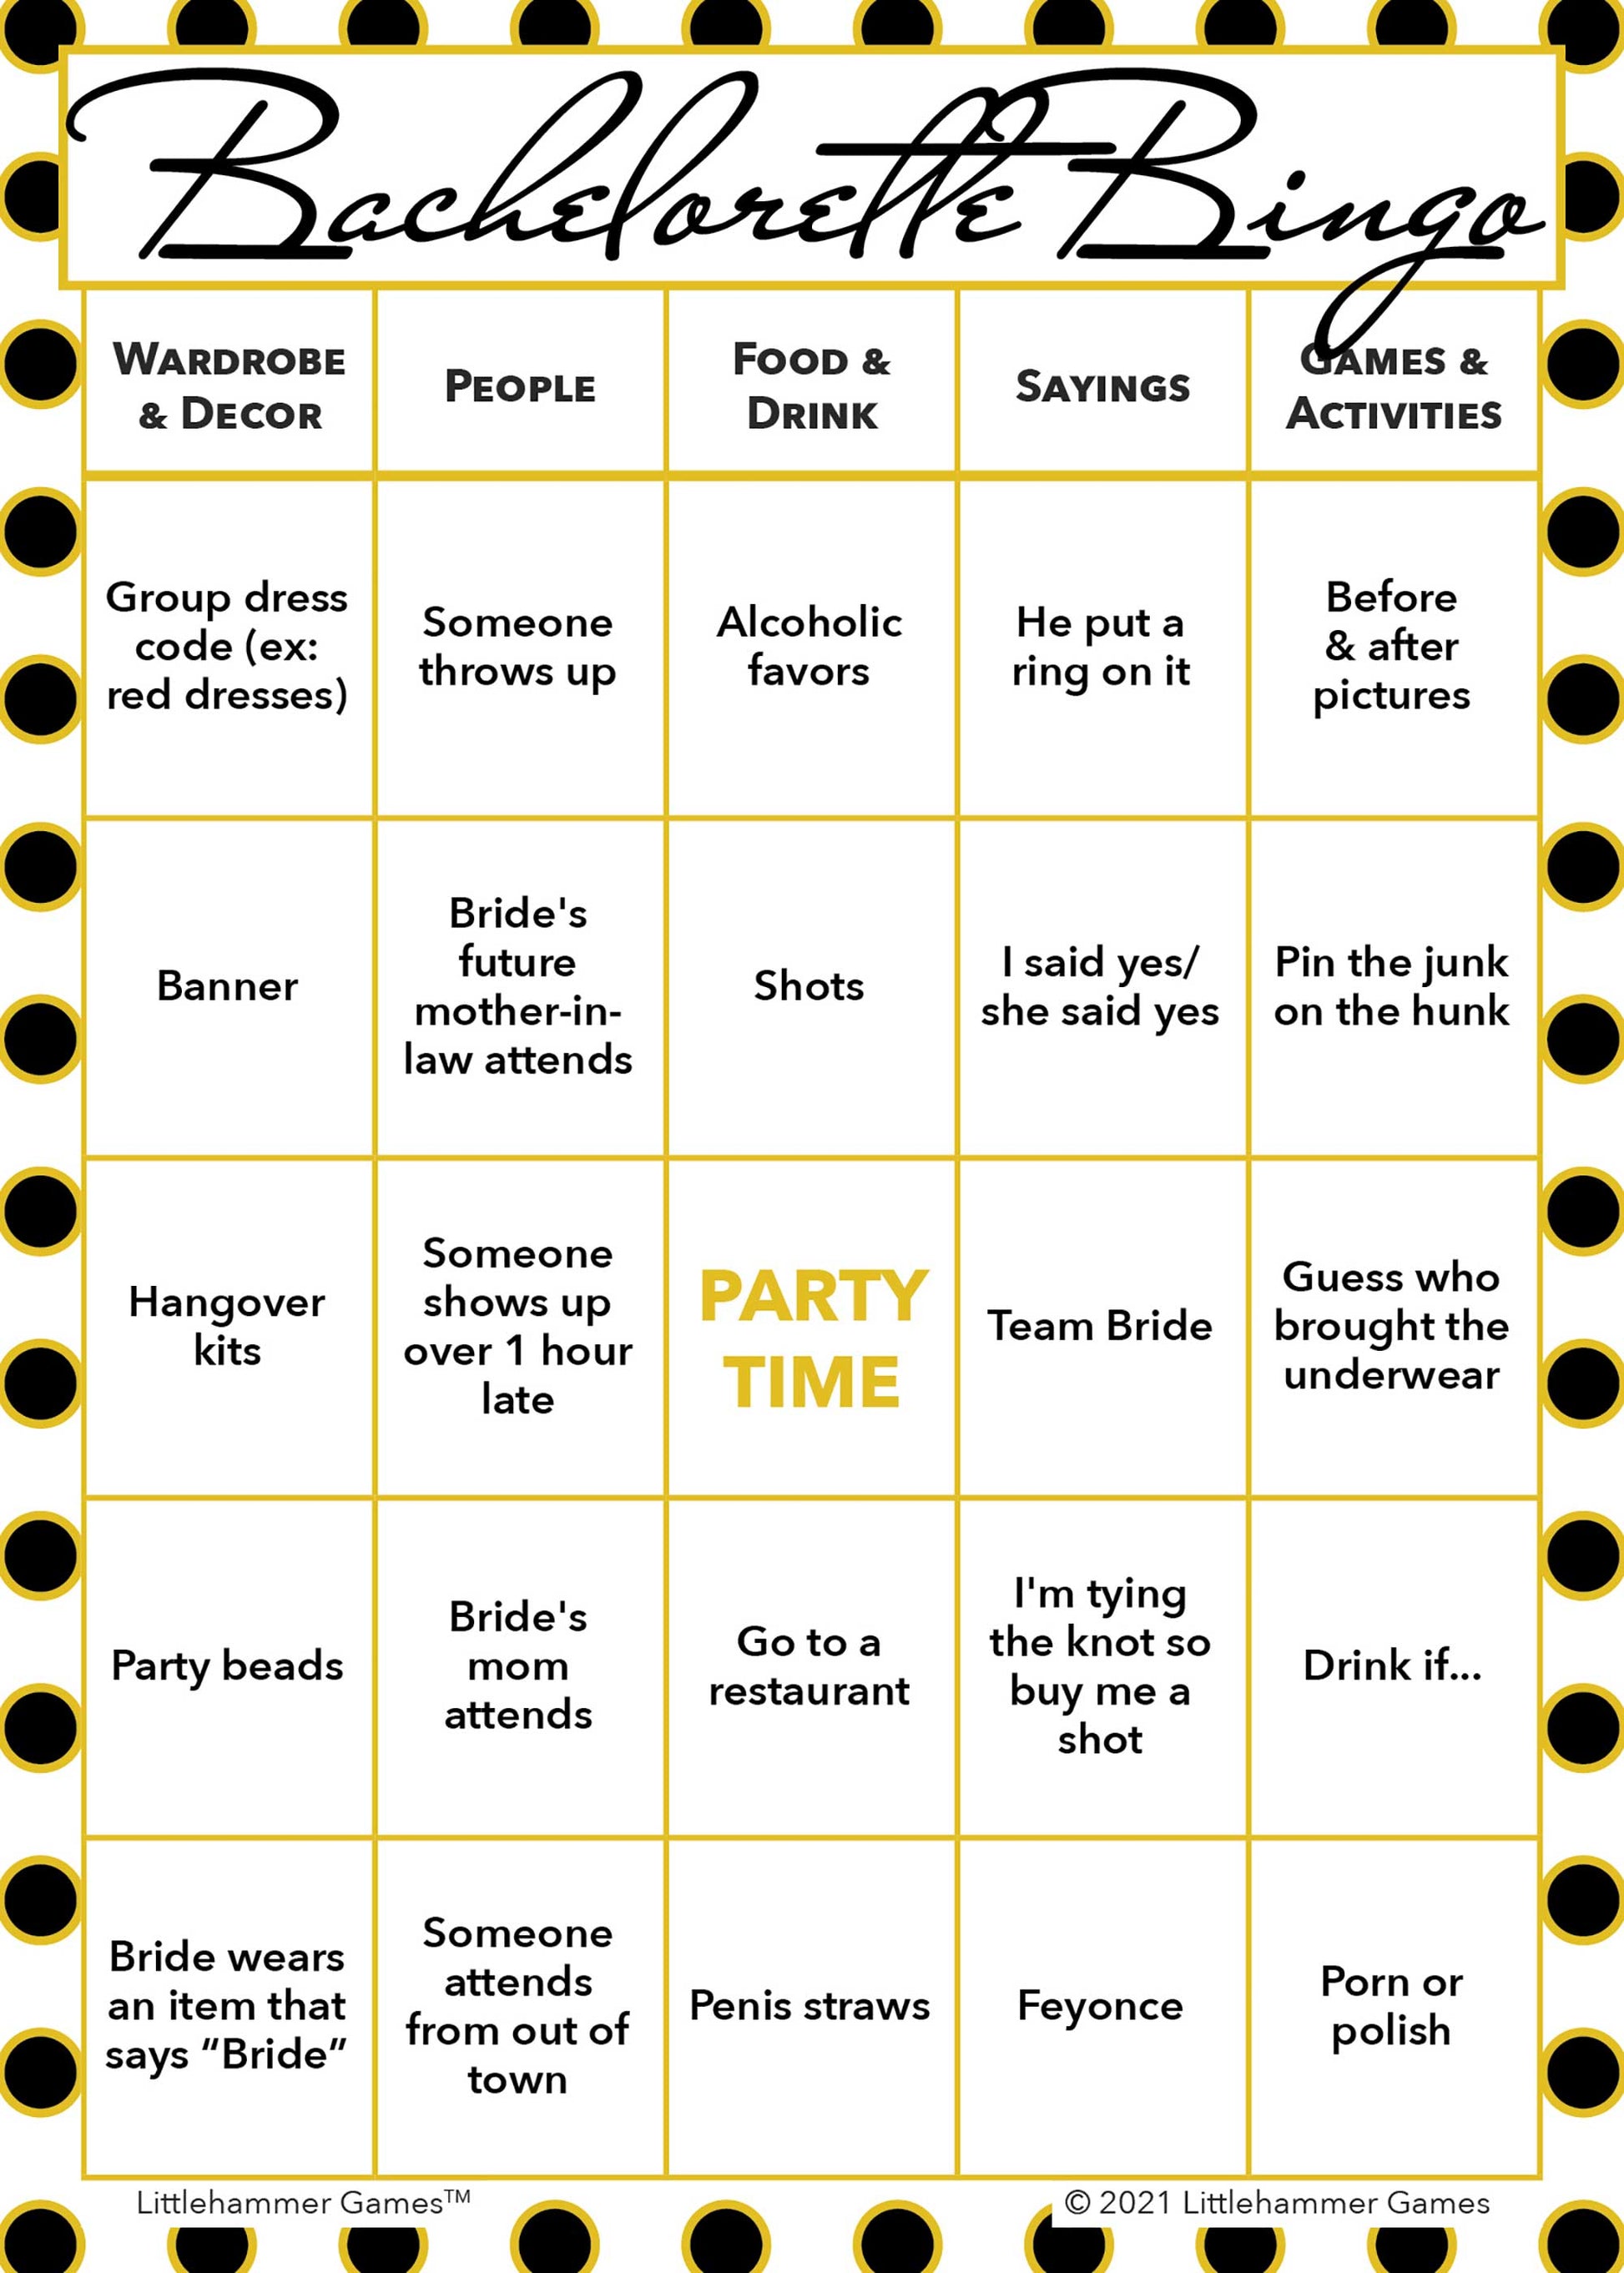 Bachelorette Bingo game card with a black and gold polka dot background